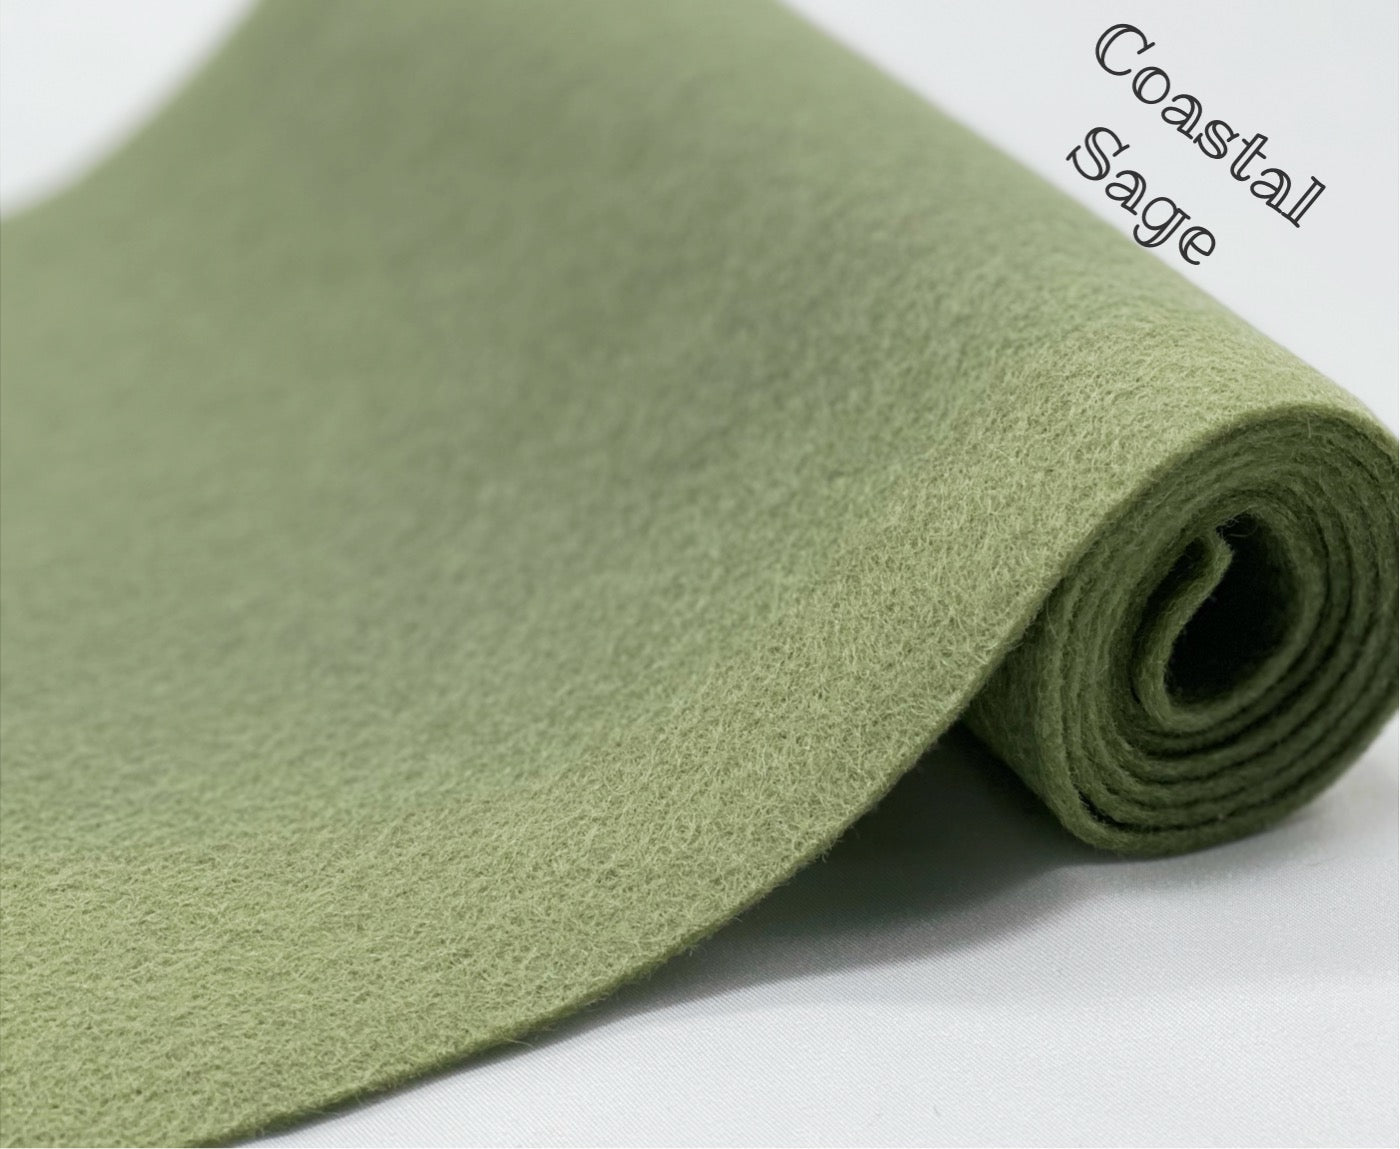 Muddy Green Felt Sheets - Woollyfelt